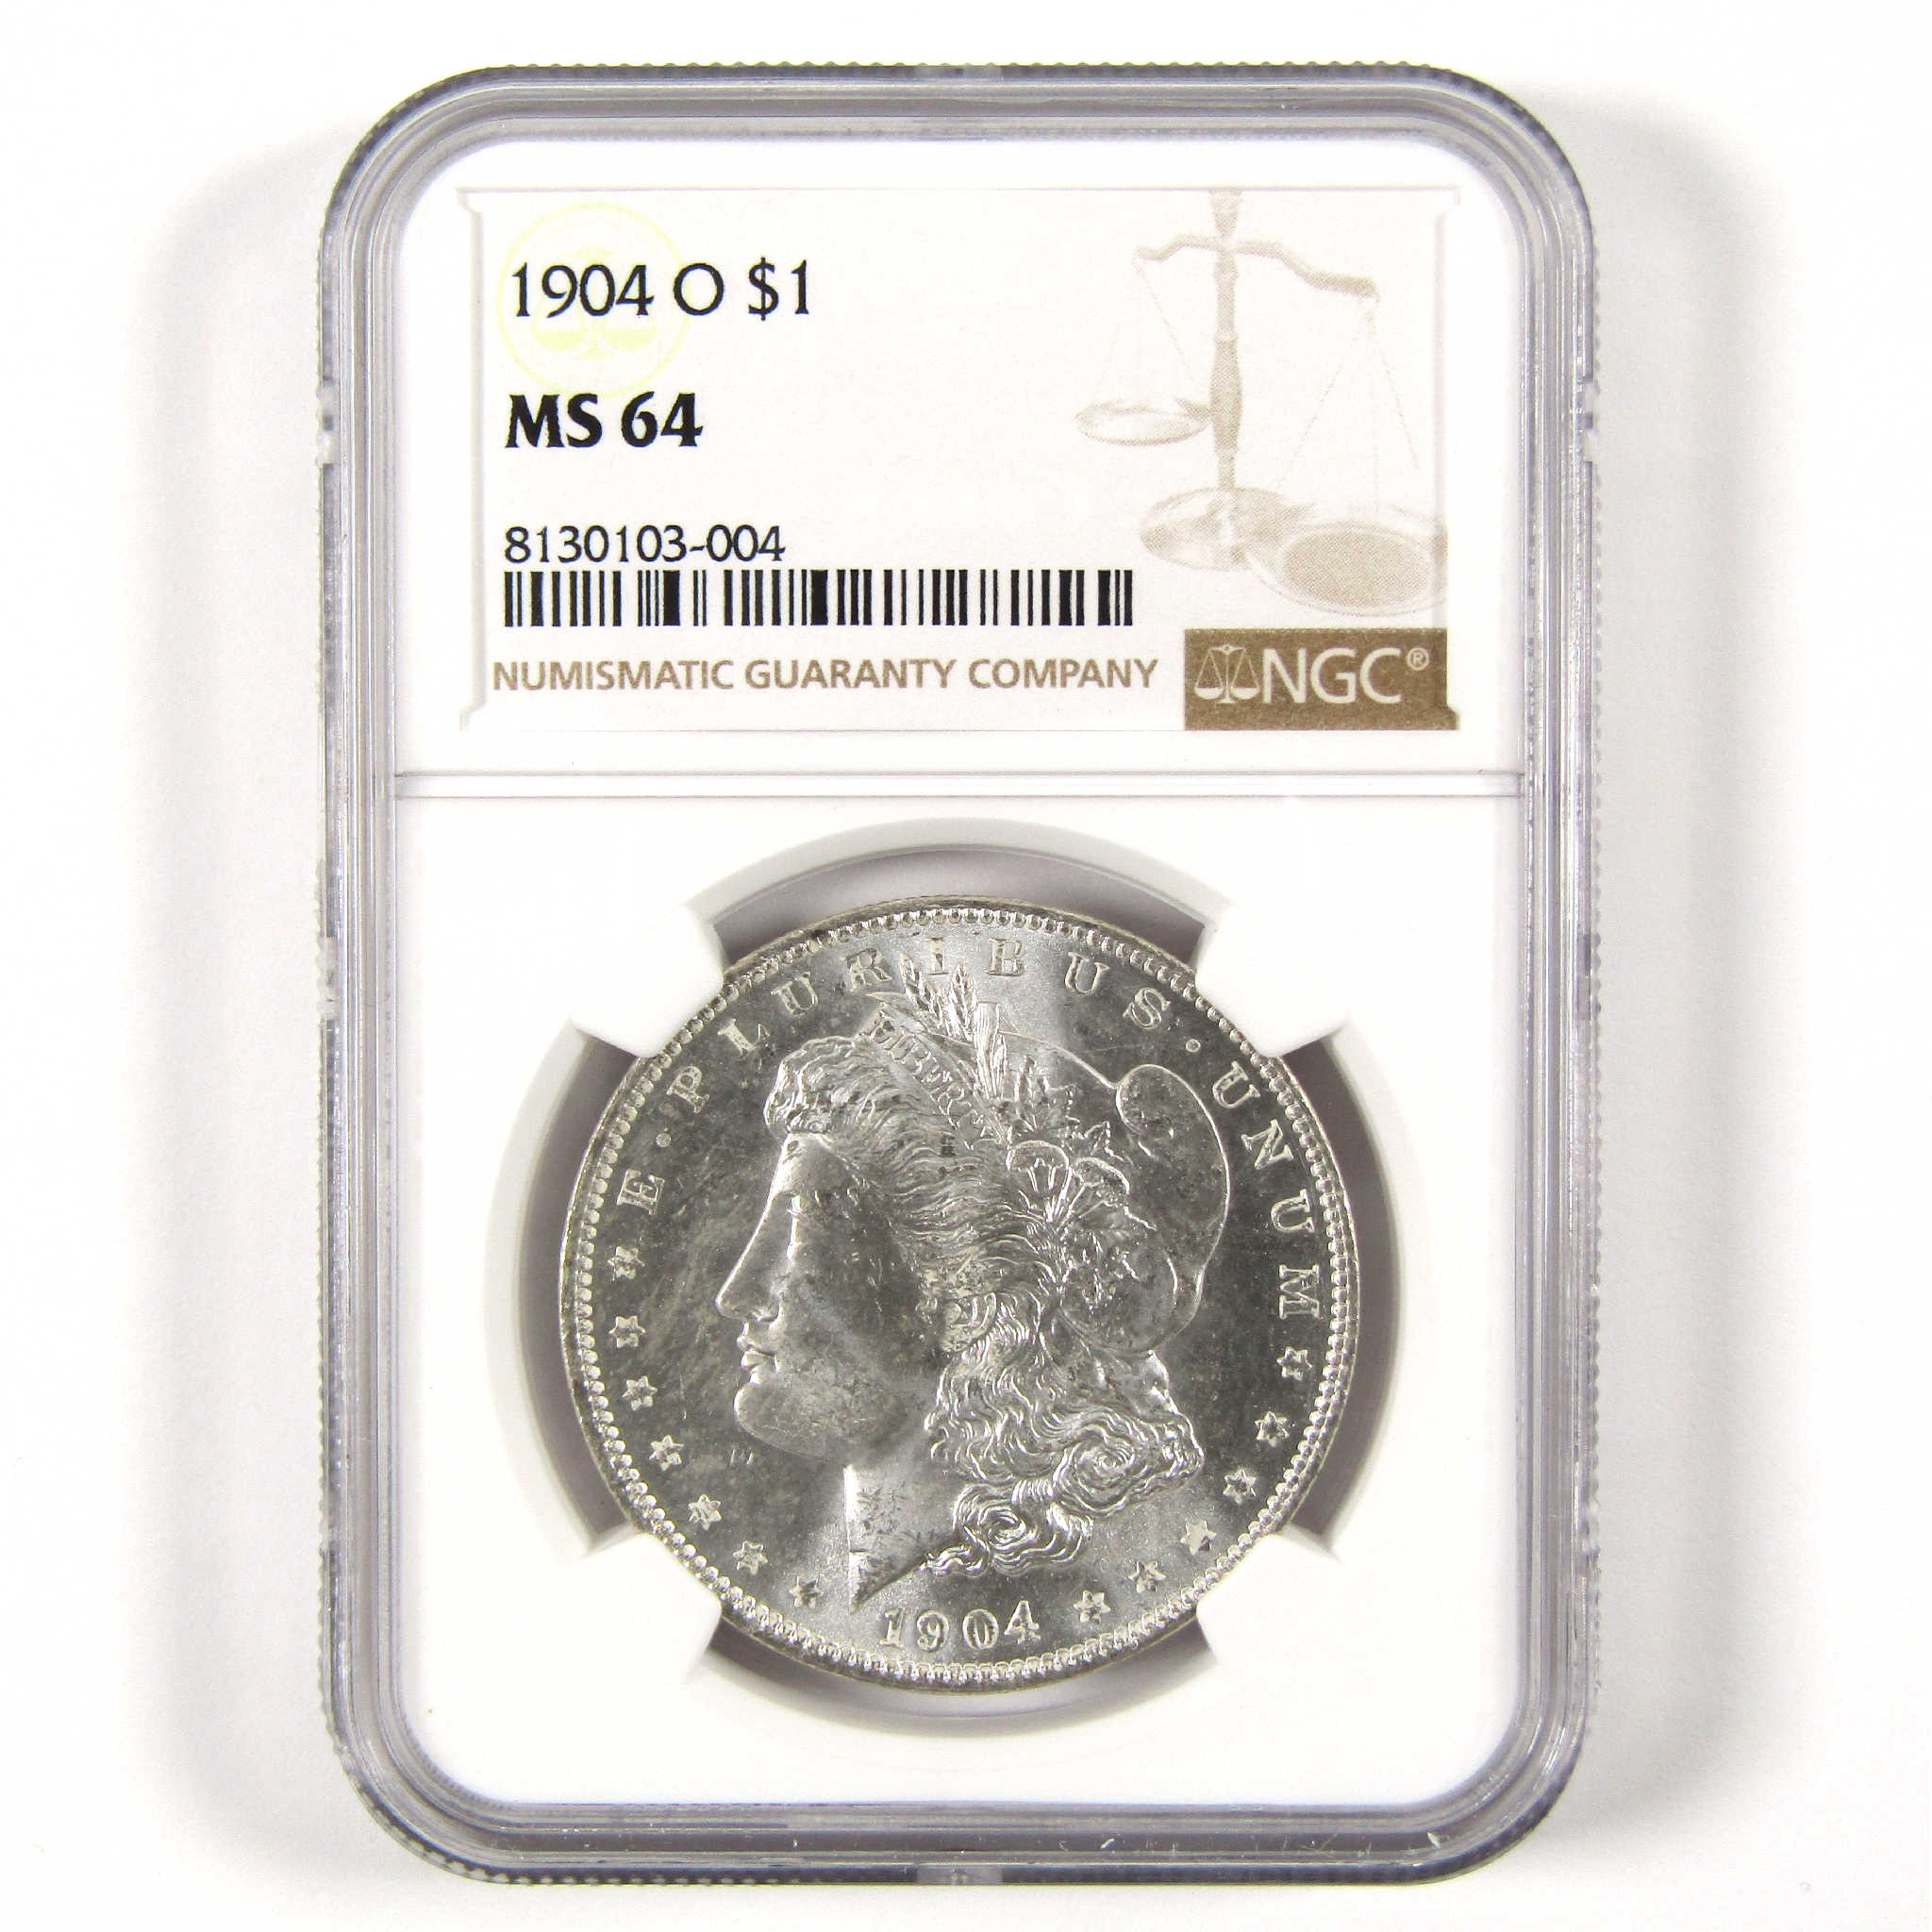 1904 O Morgan Dollar MS 64 NGC Silver $1 Uncirculated Coin SKU:CPC6286 - Morgan coin - Morgan silver dollar - Morgan silver dollar for sale - Profile Coins &amp; Collectibles